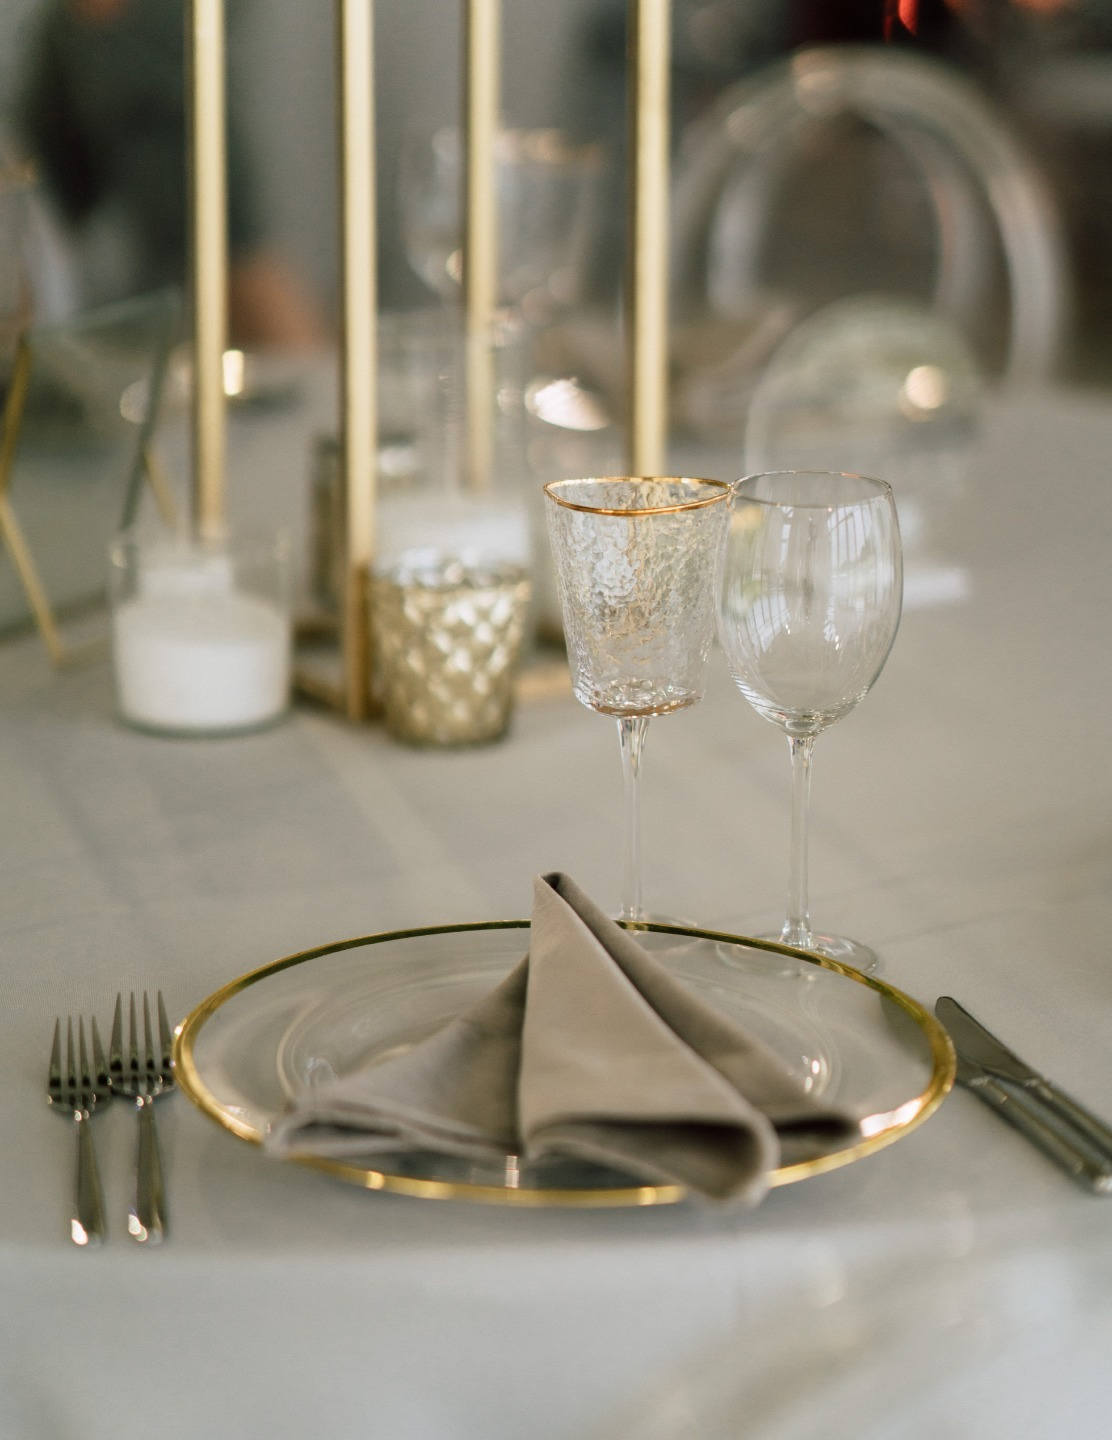 Impeccable minimalism: стильная эко-свадьба